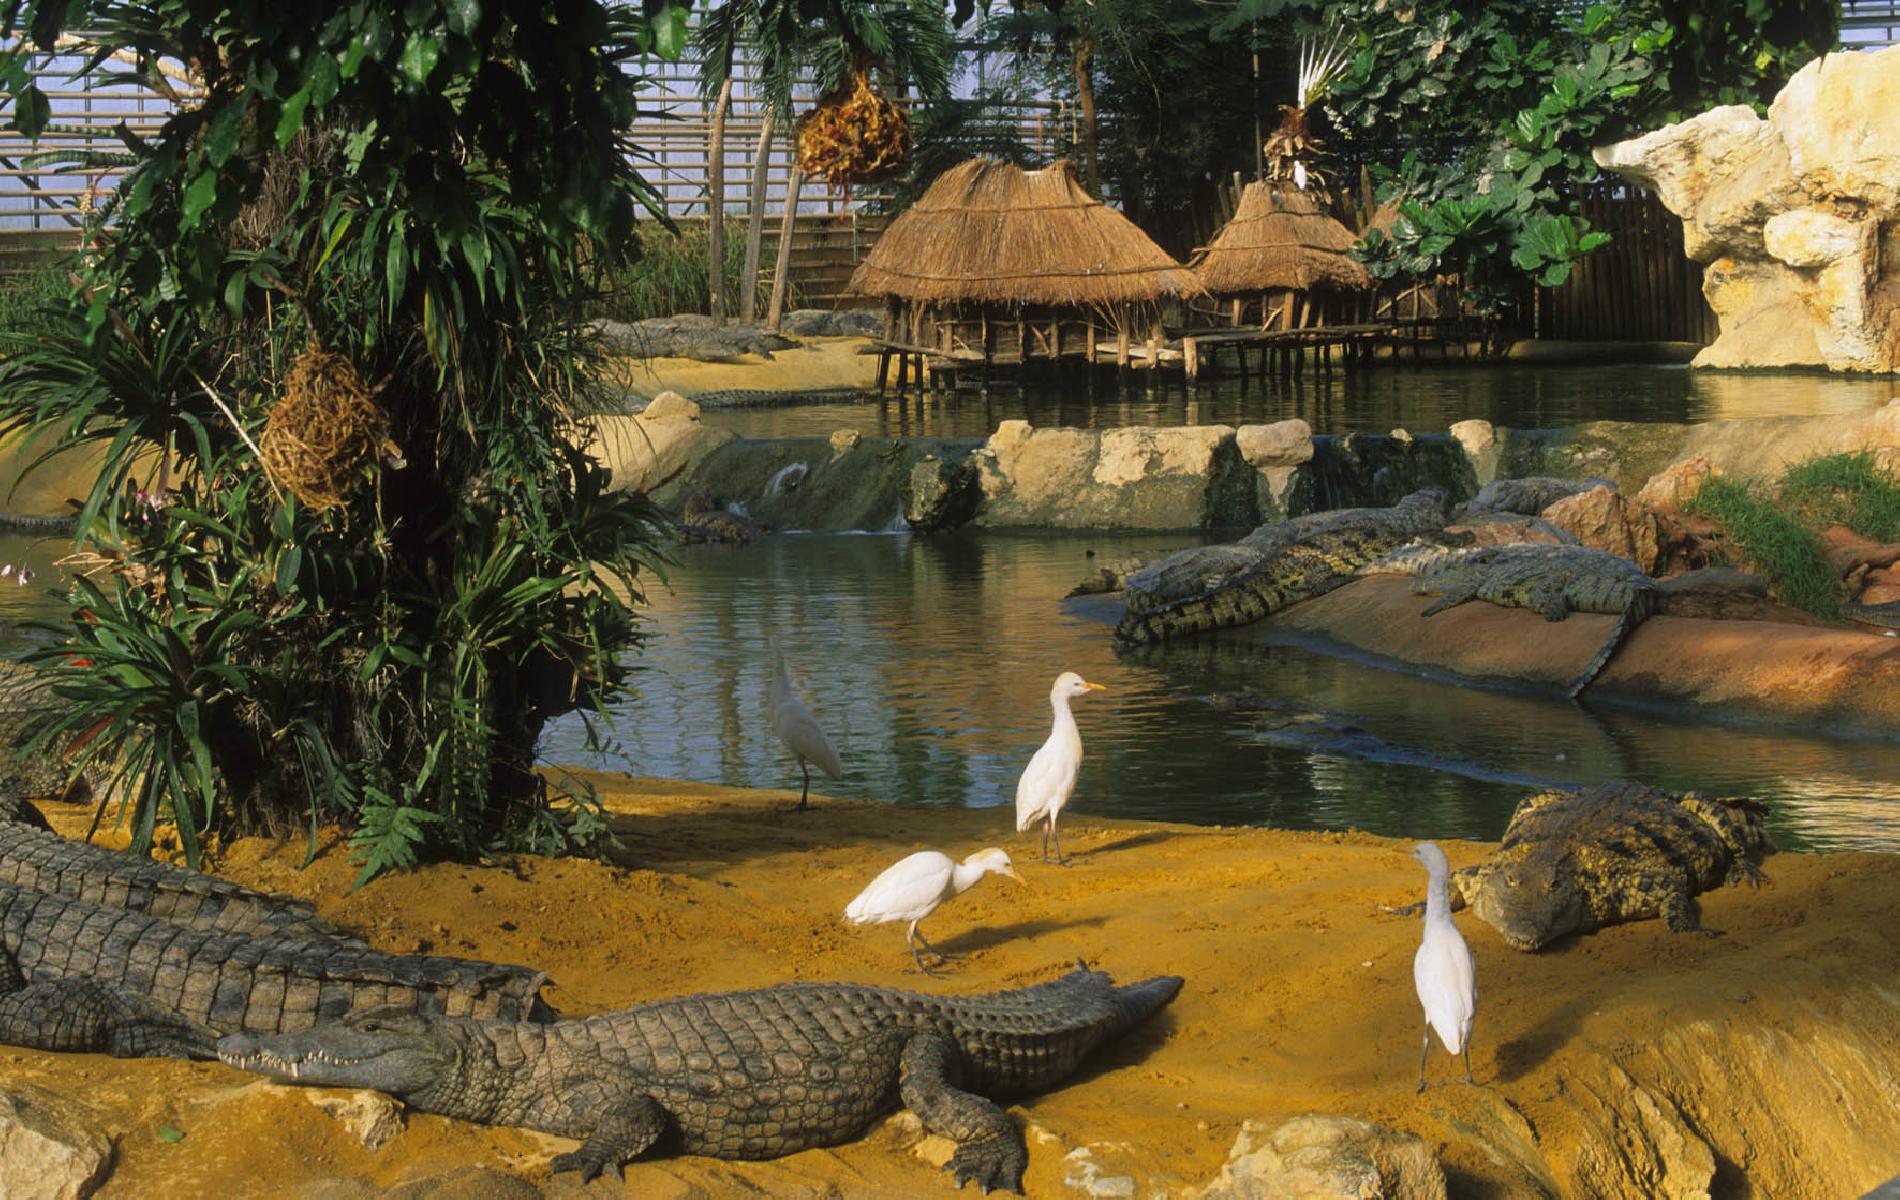  The crocodile farm